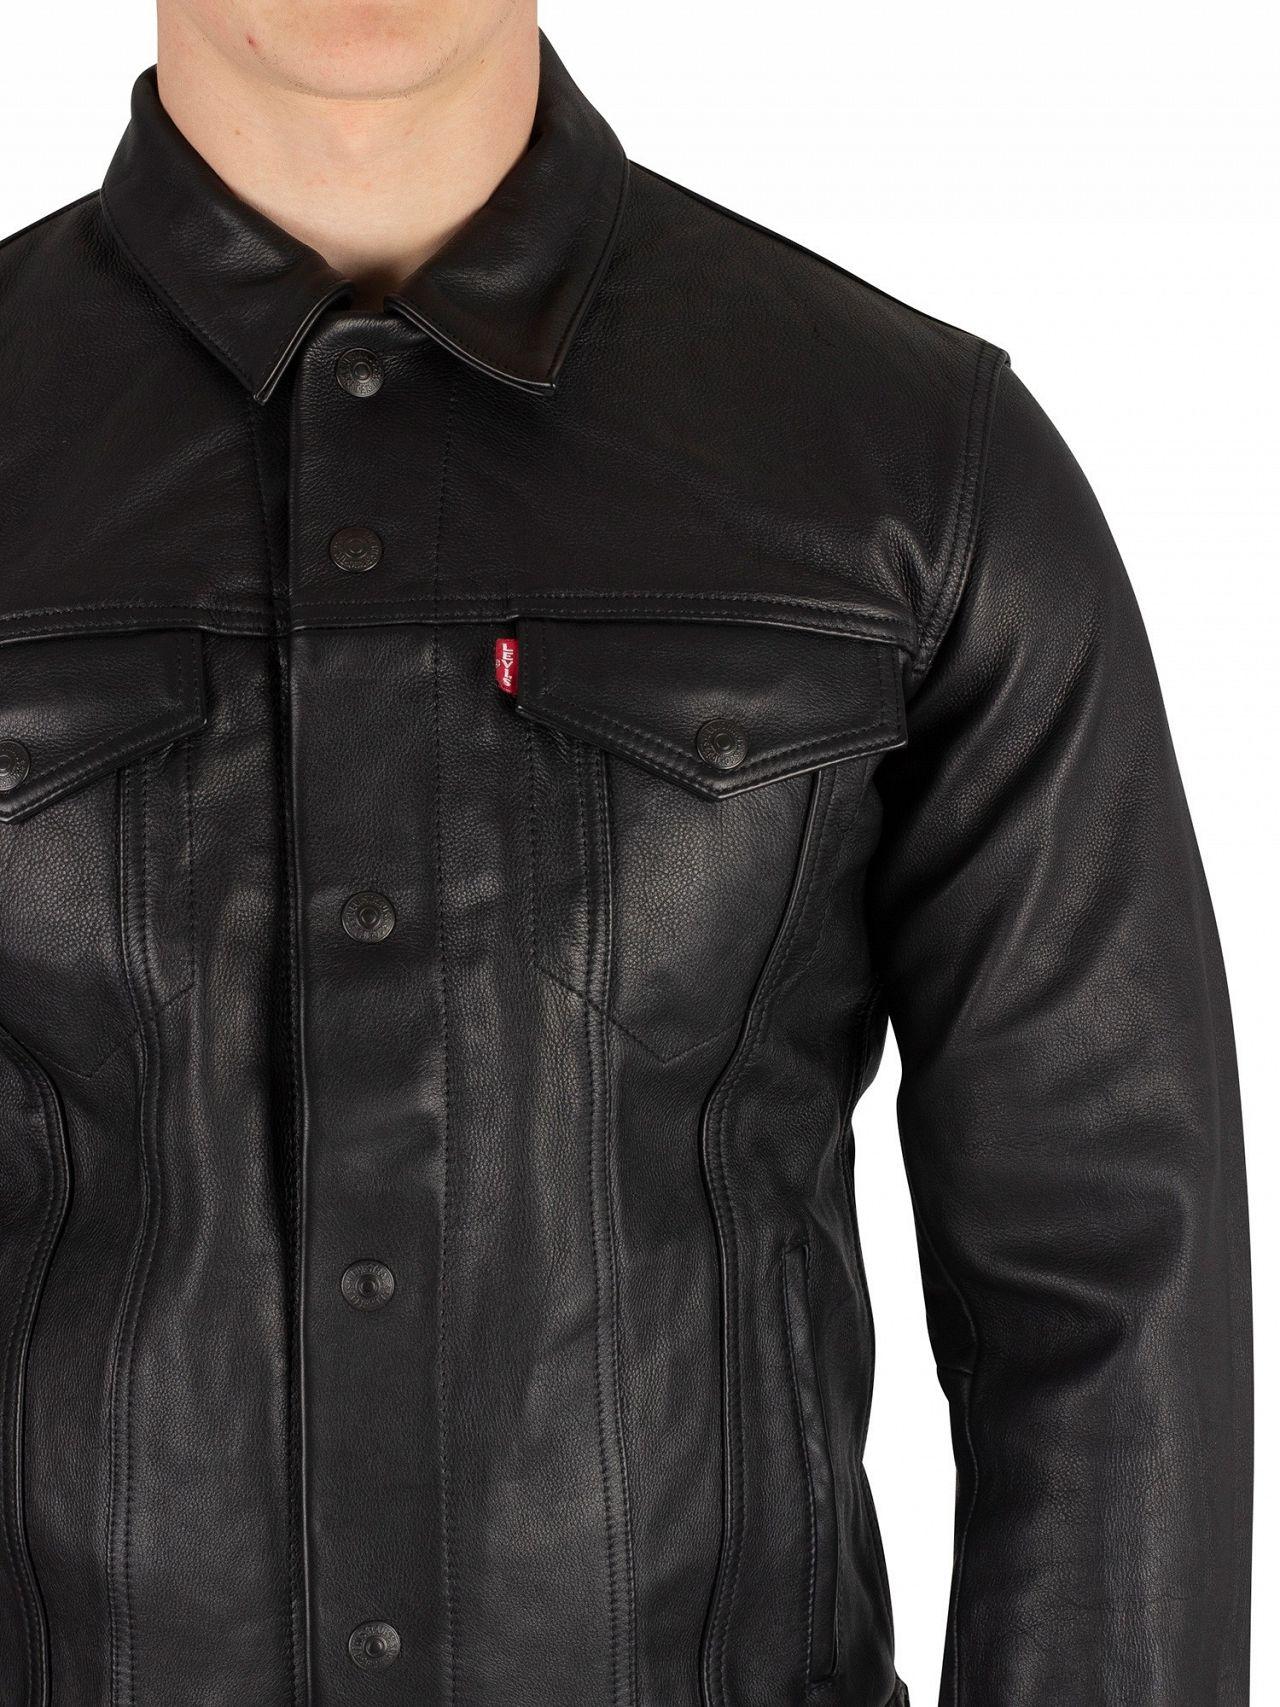 Lyst - Levi's Type 3 Black Leather Trucker Jacket in Black for Men